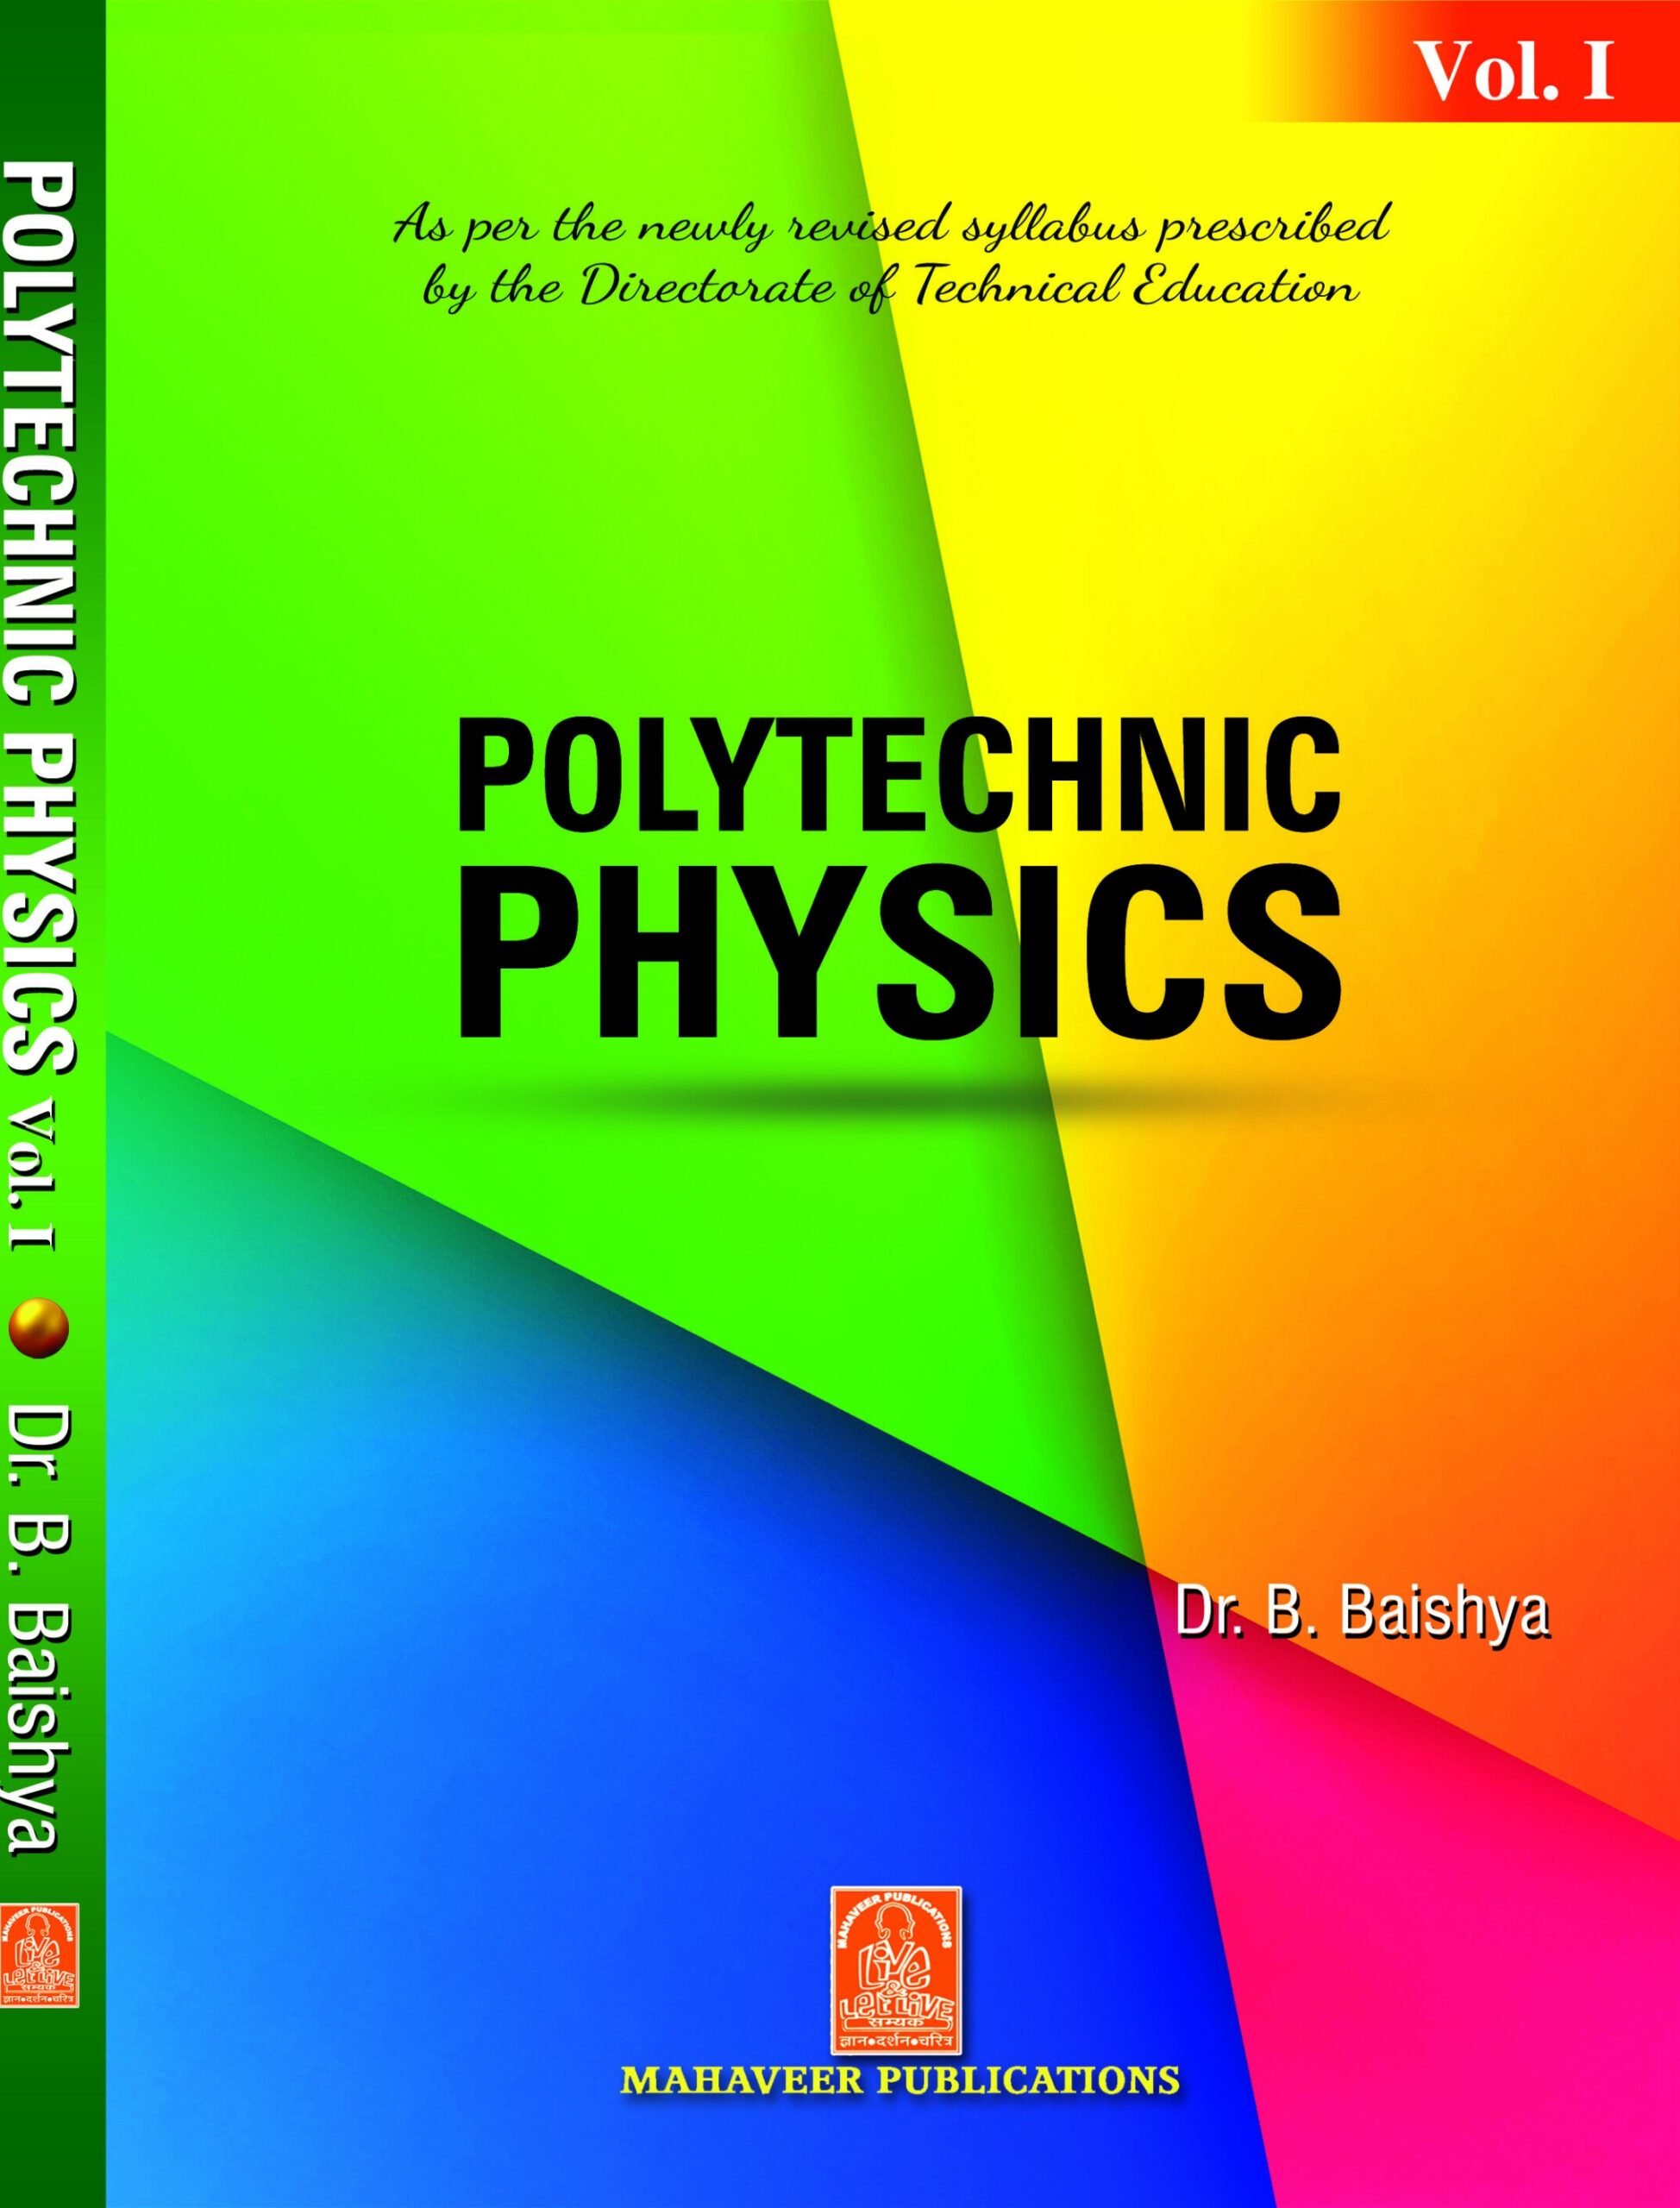 Physics-Cover-copy-3.jpg